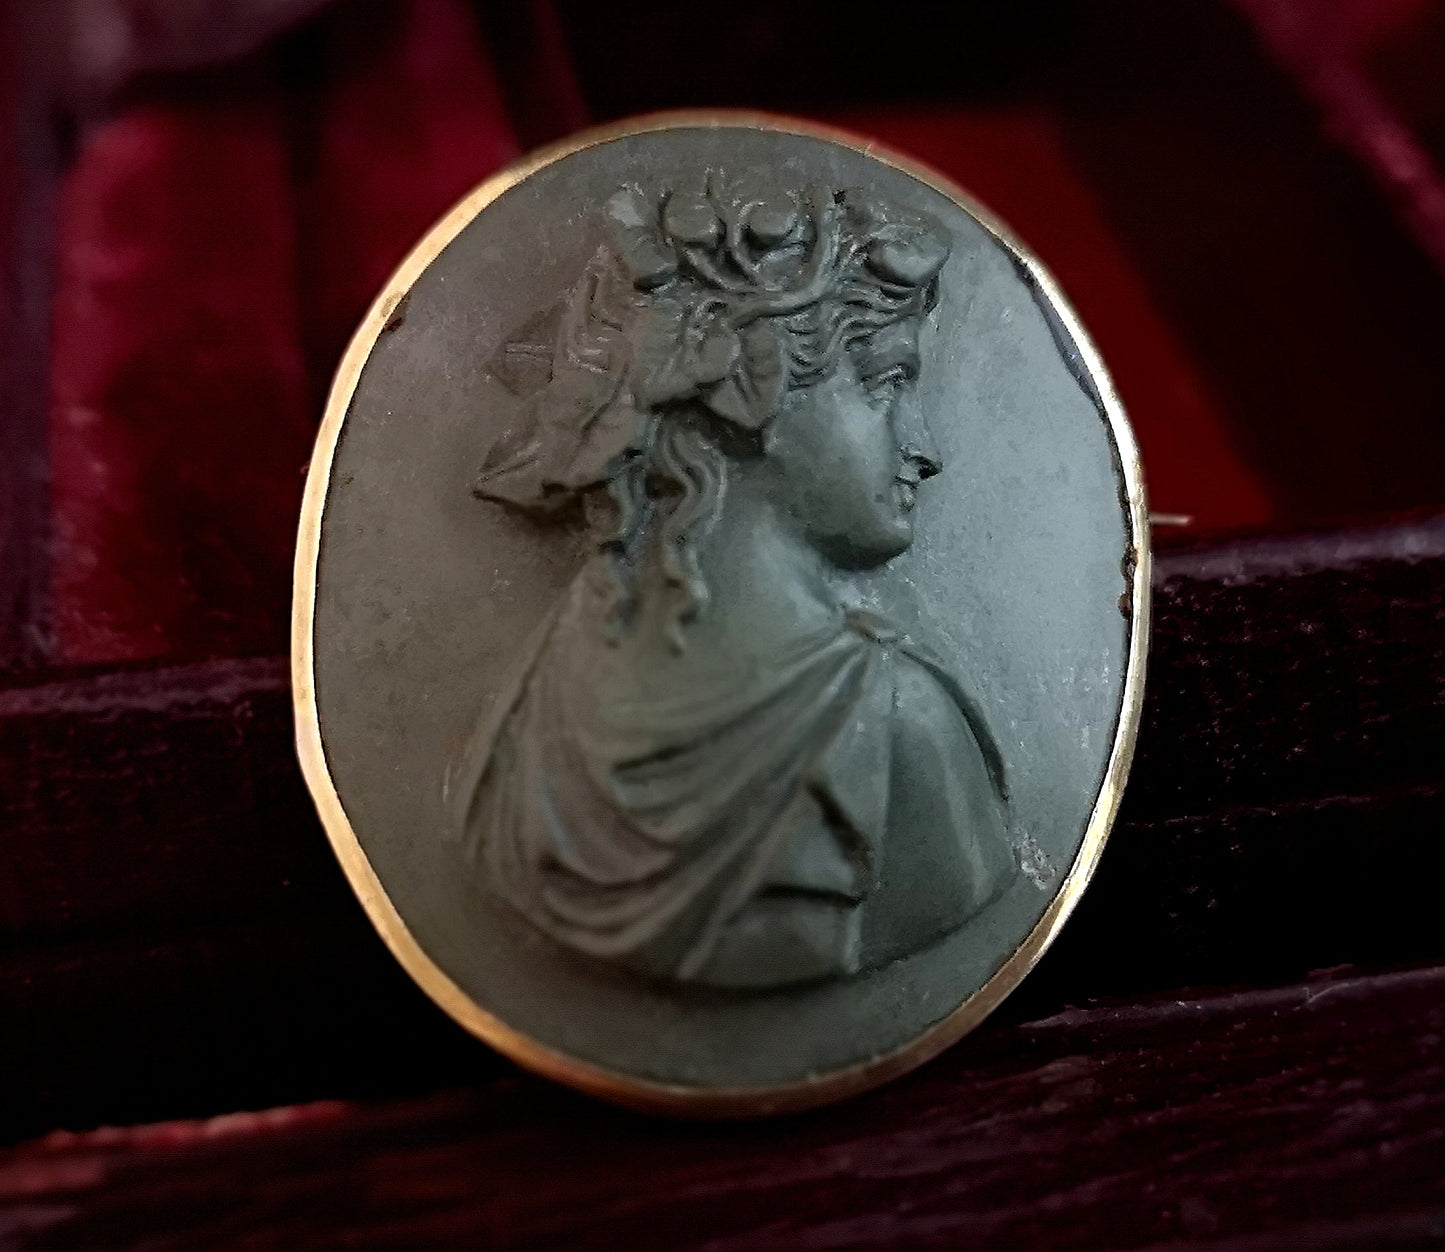 Antique Lava cameo brooch, 9ct gold, 19th century